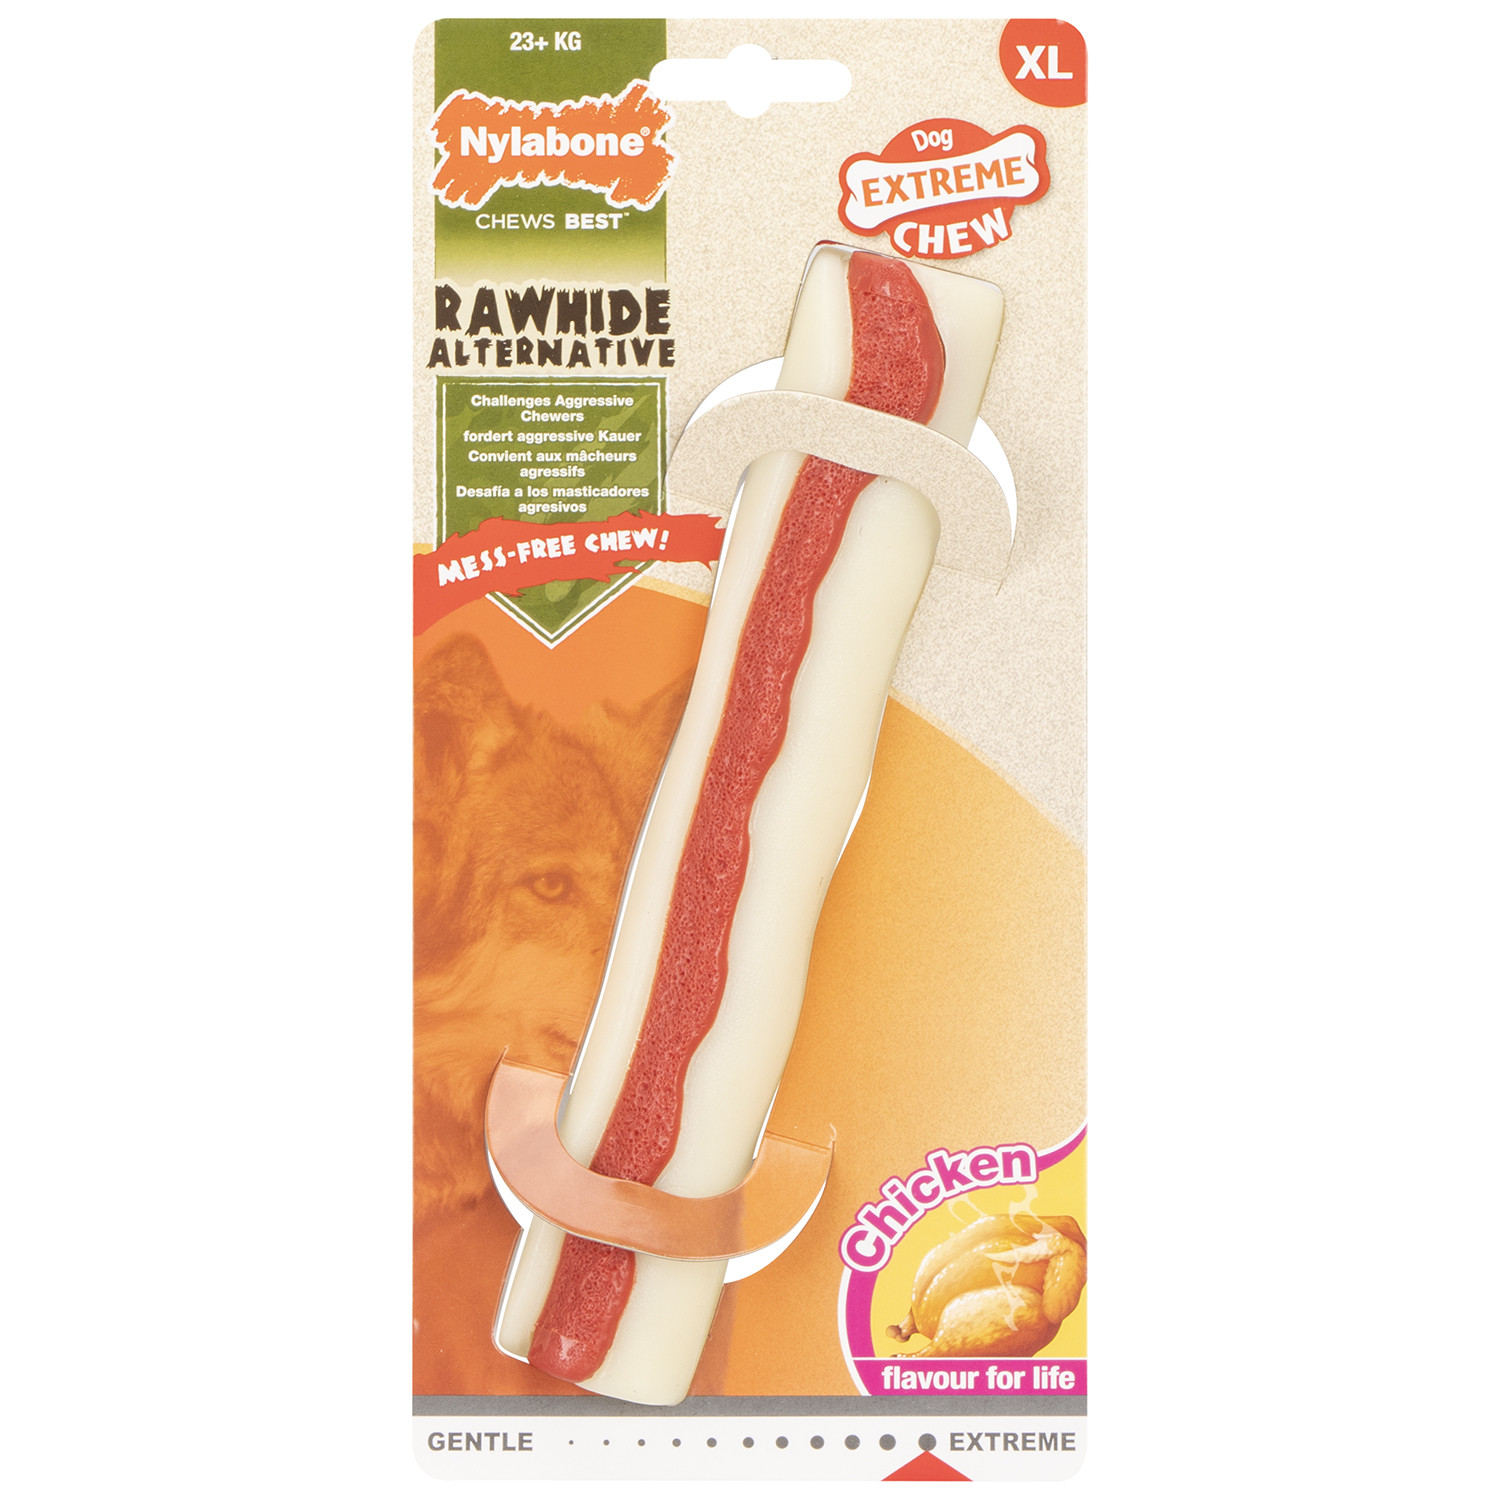 Nylabone Extreme Chew Tough Rawhide Alternative - XL Image